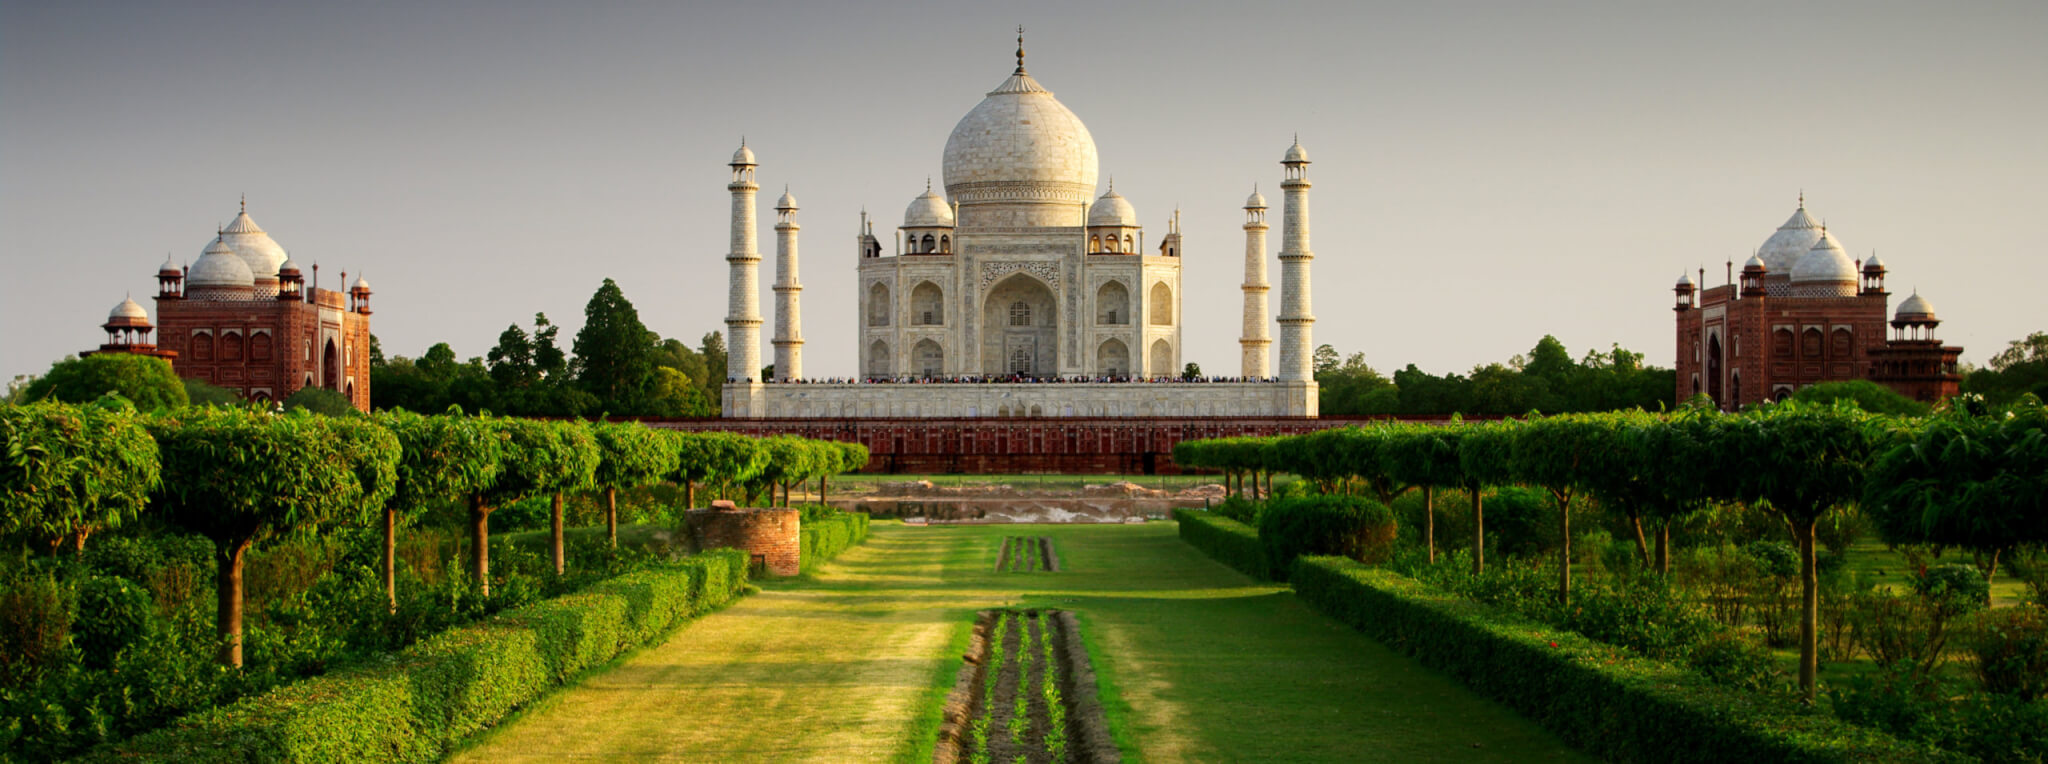 Best Way To Get To The Taj Mahal From The Us : Https Encrypted Tbn0 Gstatic Com Images Q Tbn And9gctbla 5tcyilvfwur7uujht57b4ff8hs9jedknjoyovwwtu0ftt Usqp Cau